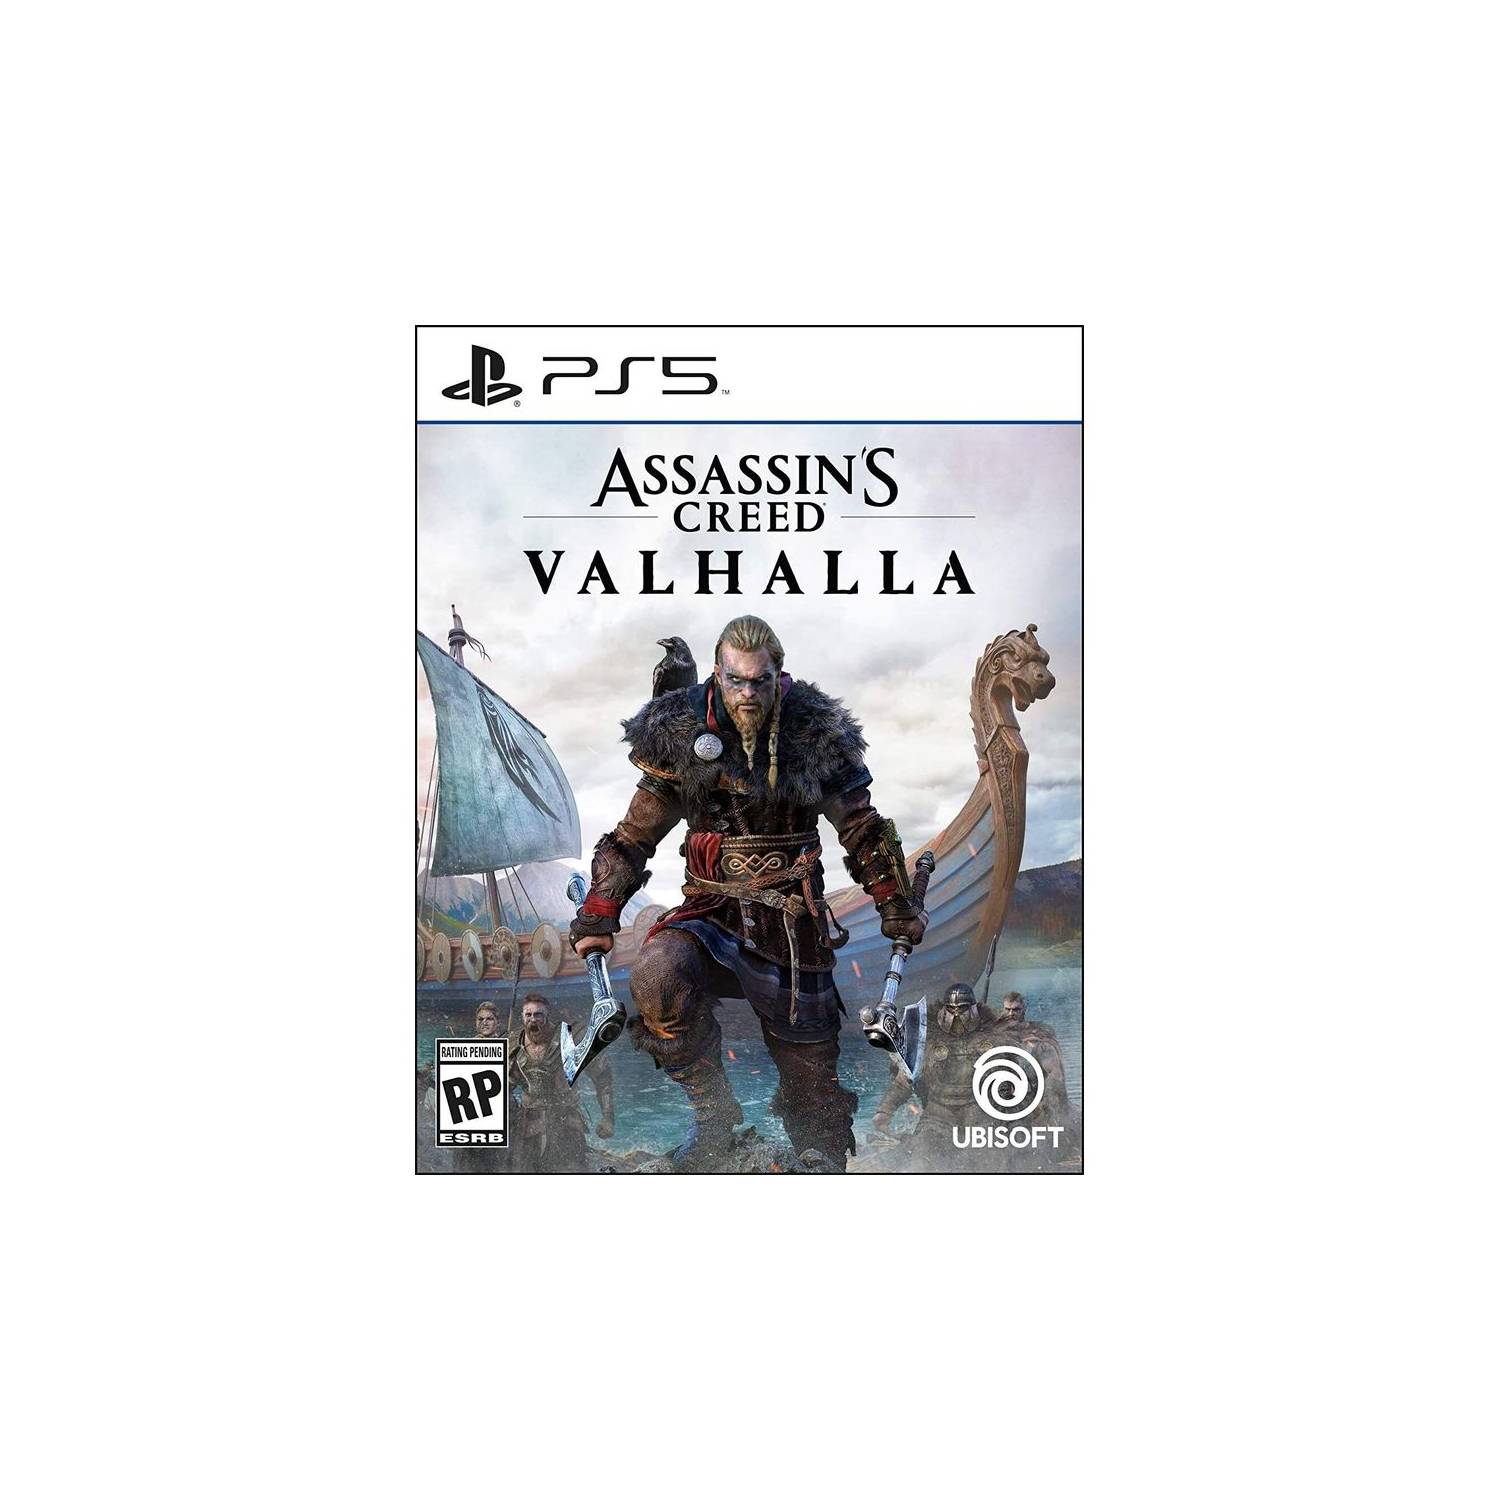 Assassin's creed valhalla - playstation 5 UBISOFT